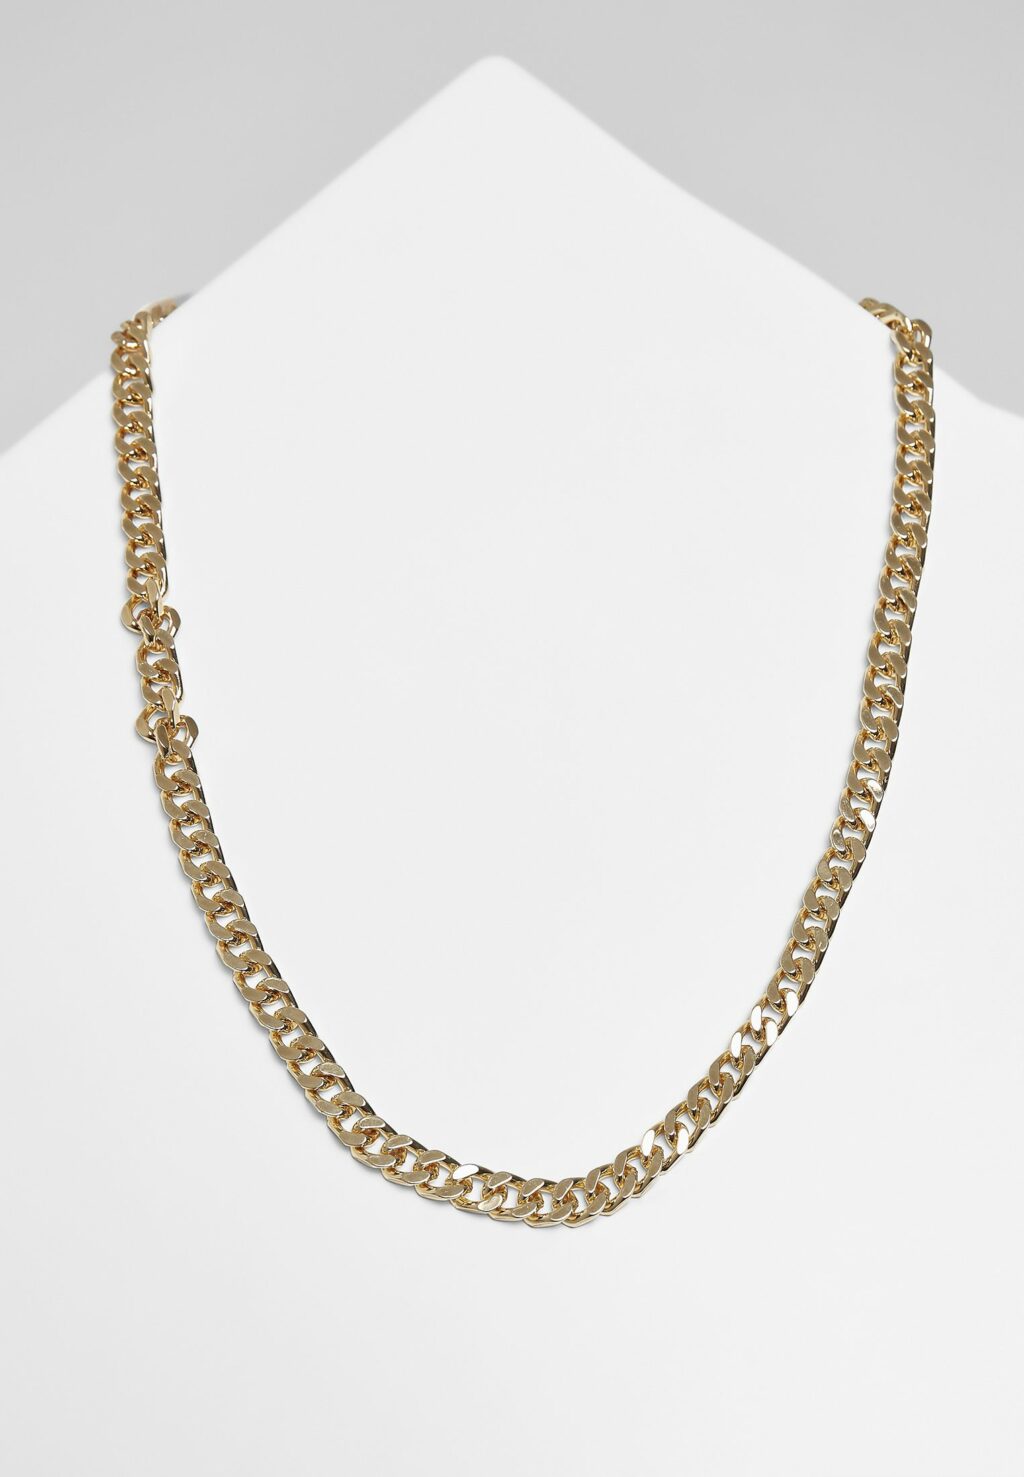 Long Basic Necklace gold one TB4048